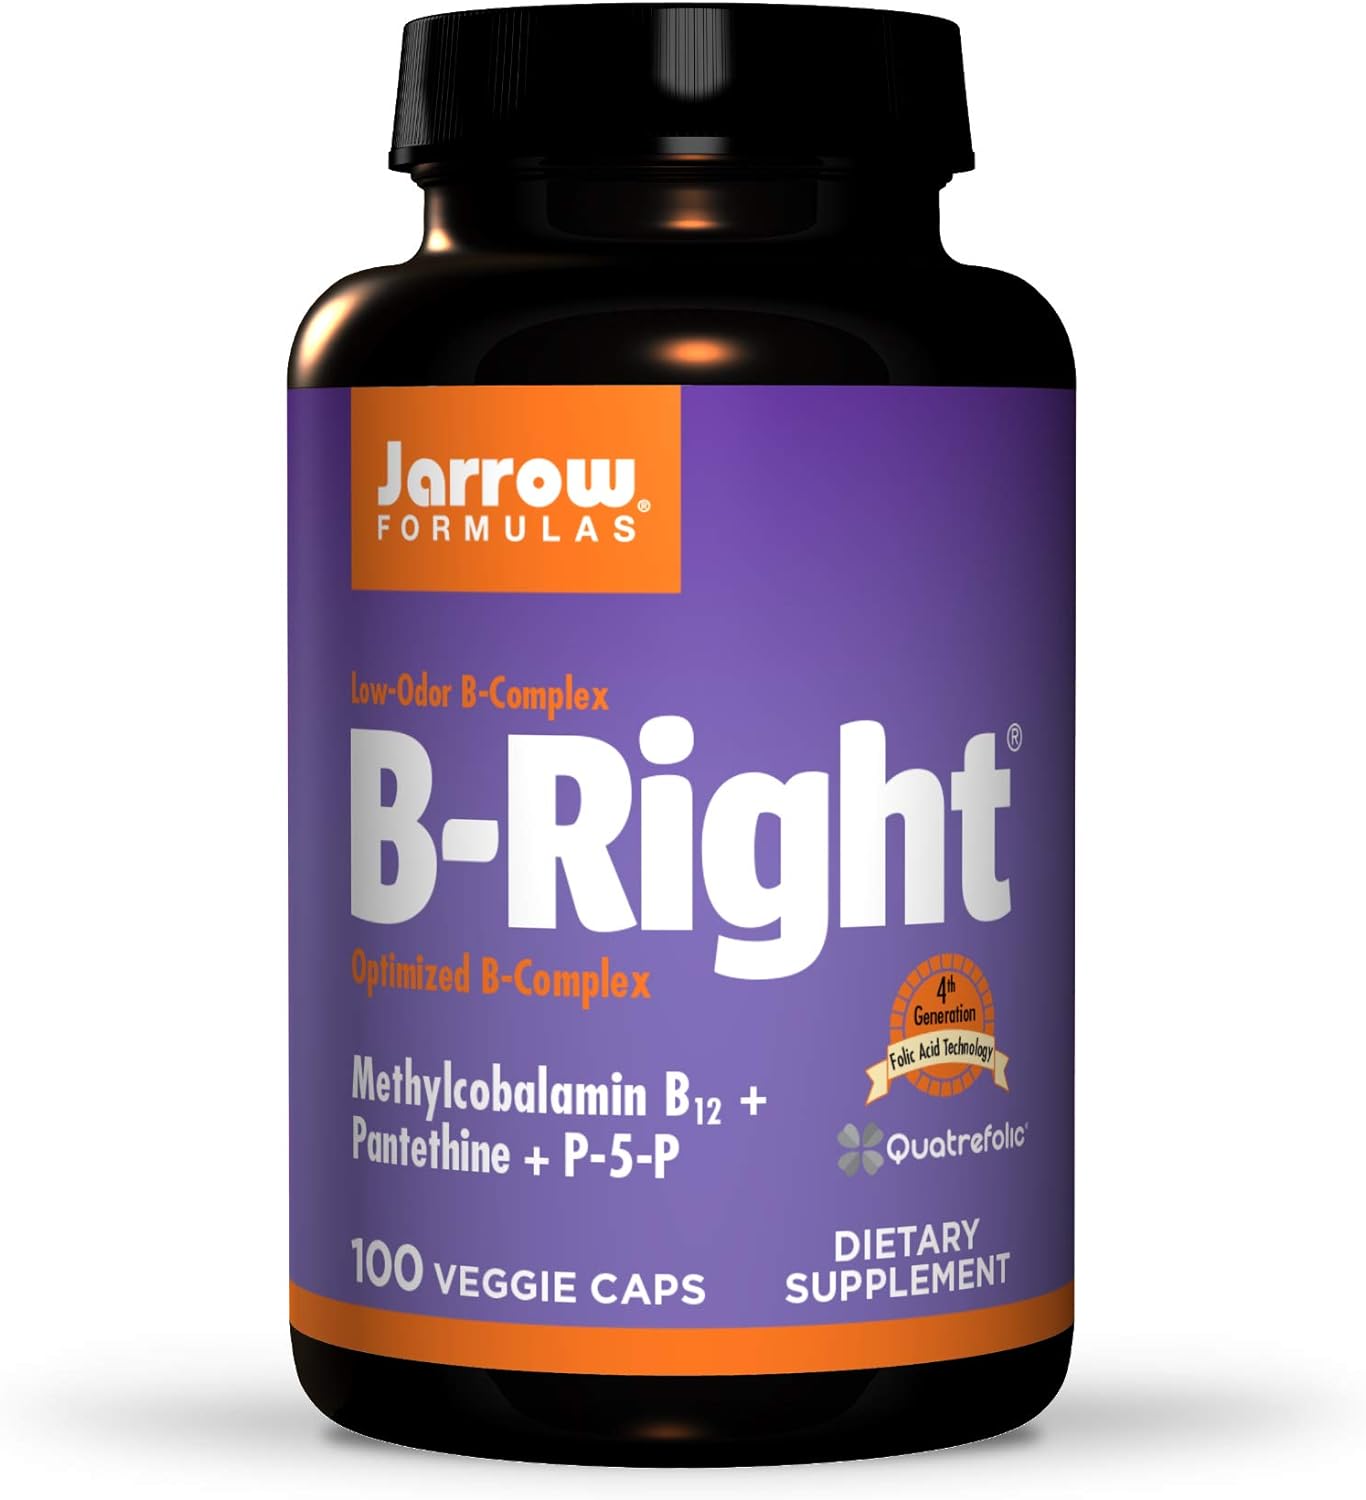 Jarrow Formulas B-Right - Low-Odor Vitamin B-Complex Formula - Energy  Metabolism Support - Promotes Brain, Heart  Cardiovascular Health - 100 Servings (Pack of 1)